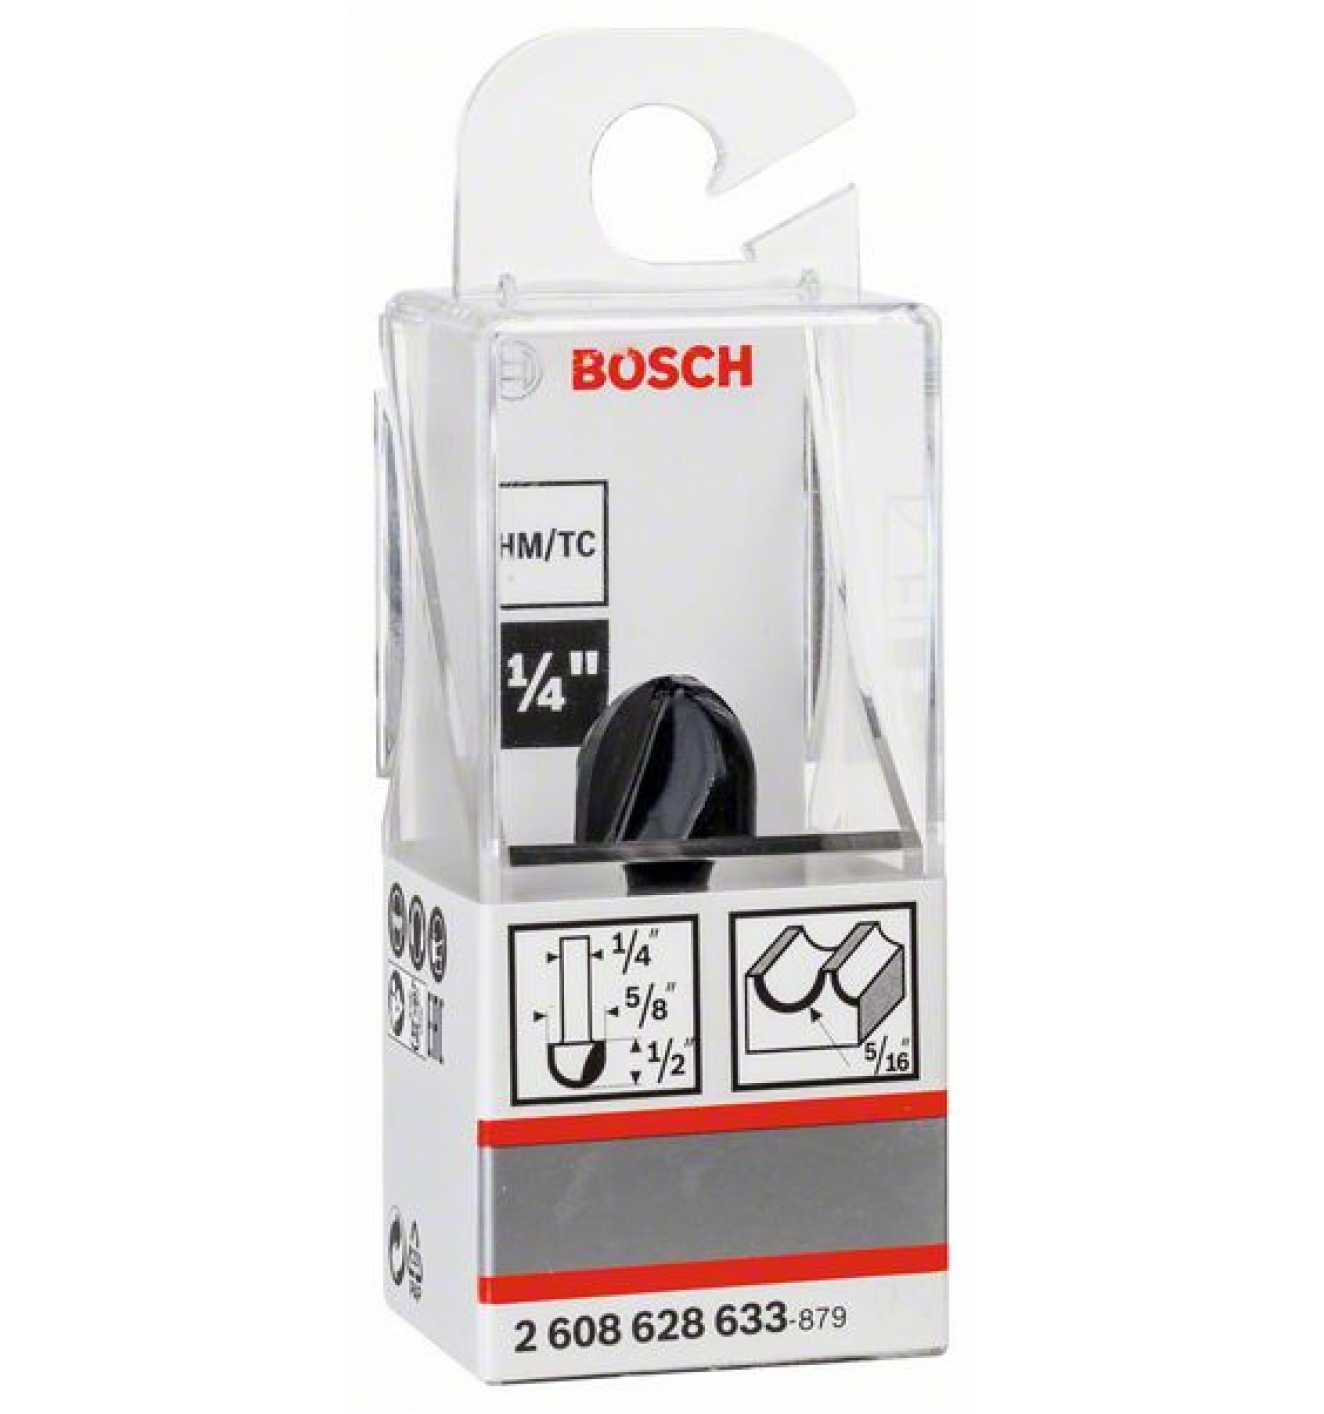 Bosch Core box bit, 1/4", R1 8 mm, D 15.9 mm, L 12.3 mm, G 45 mm 2608628633 Power Tool Services